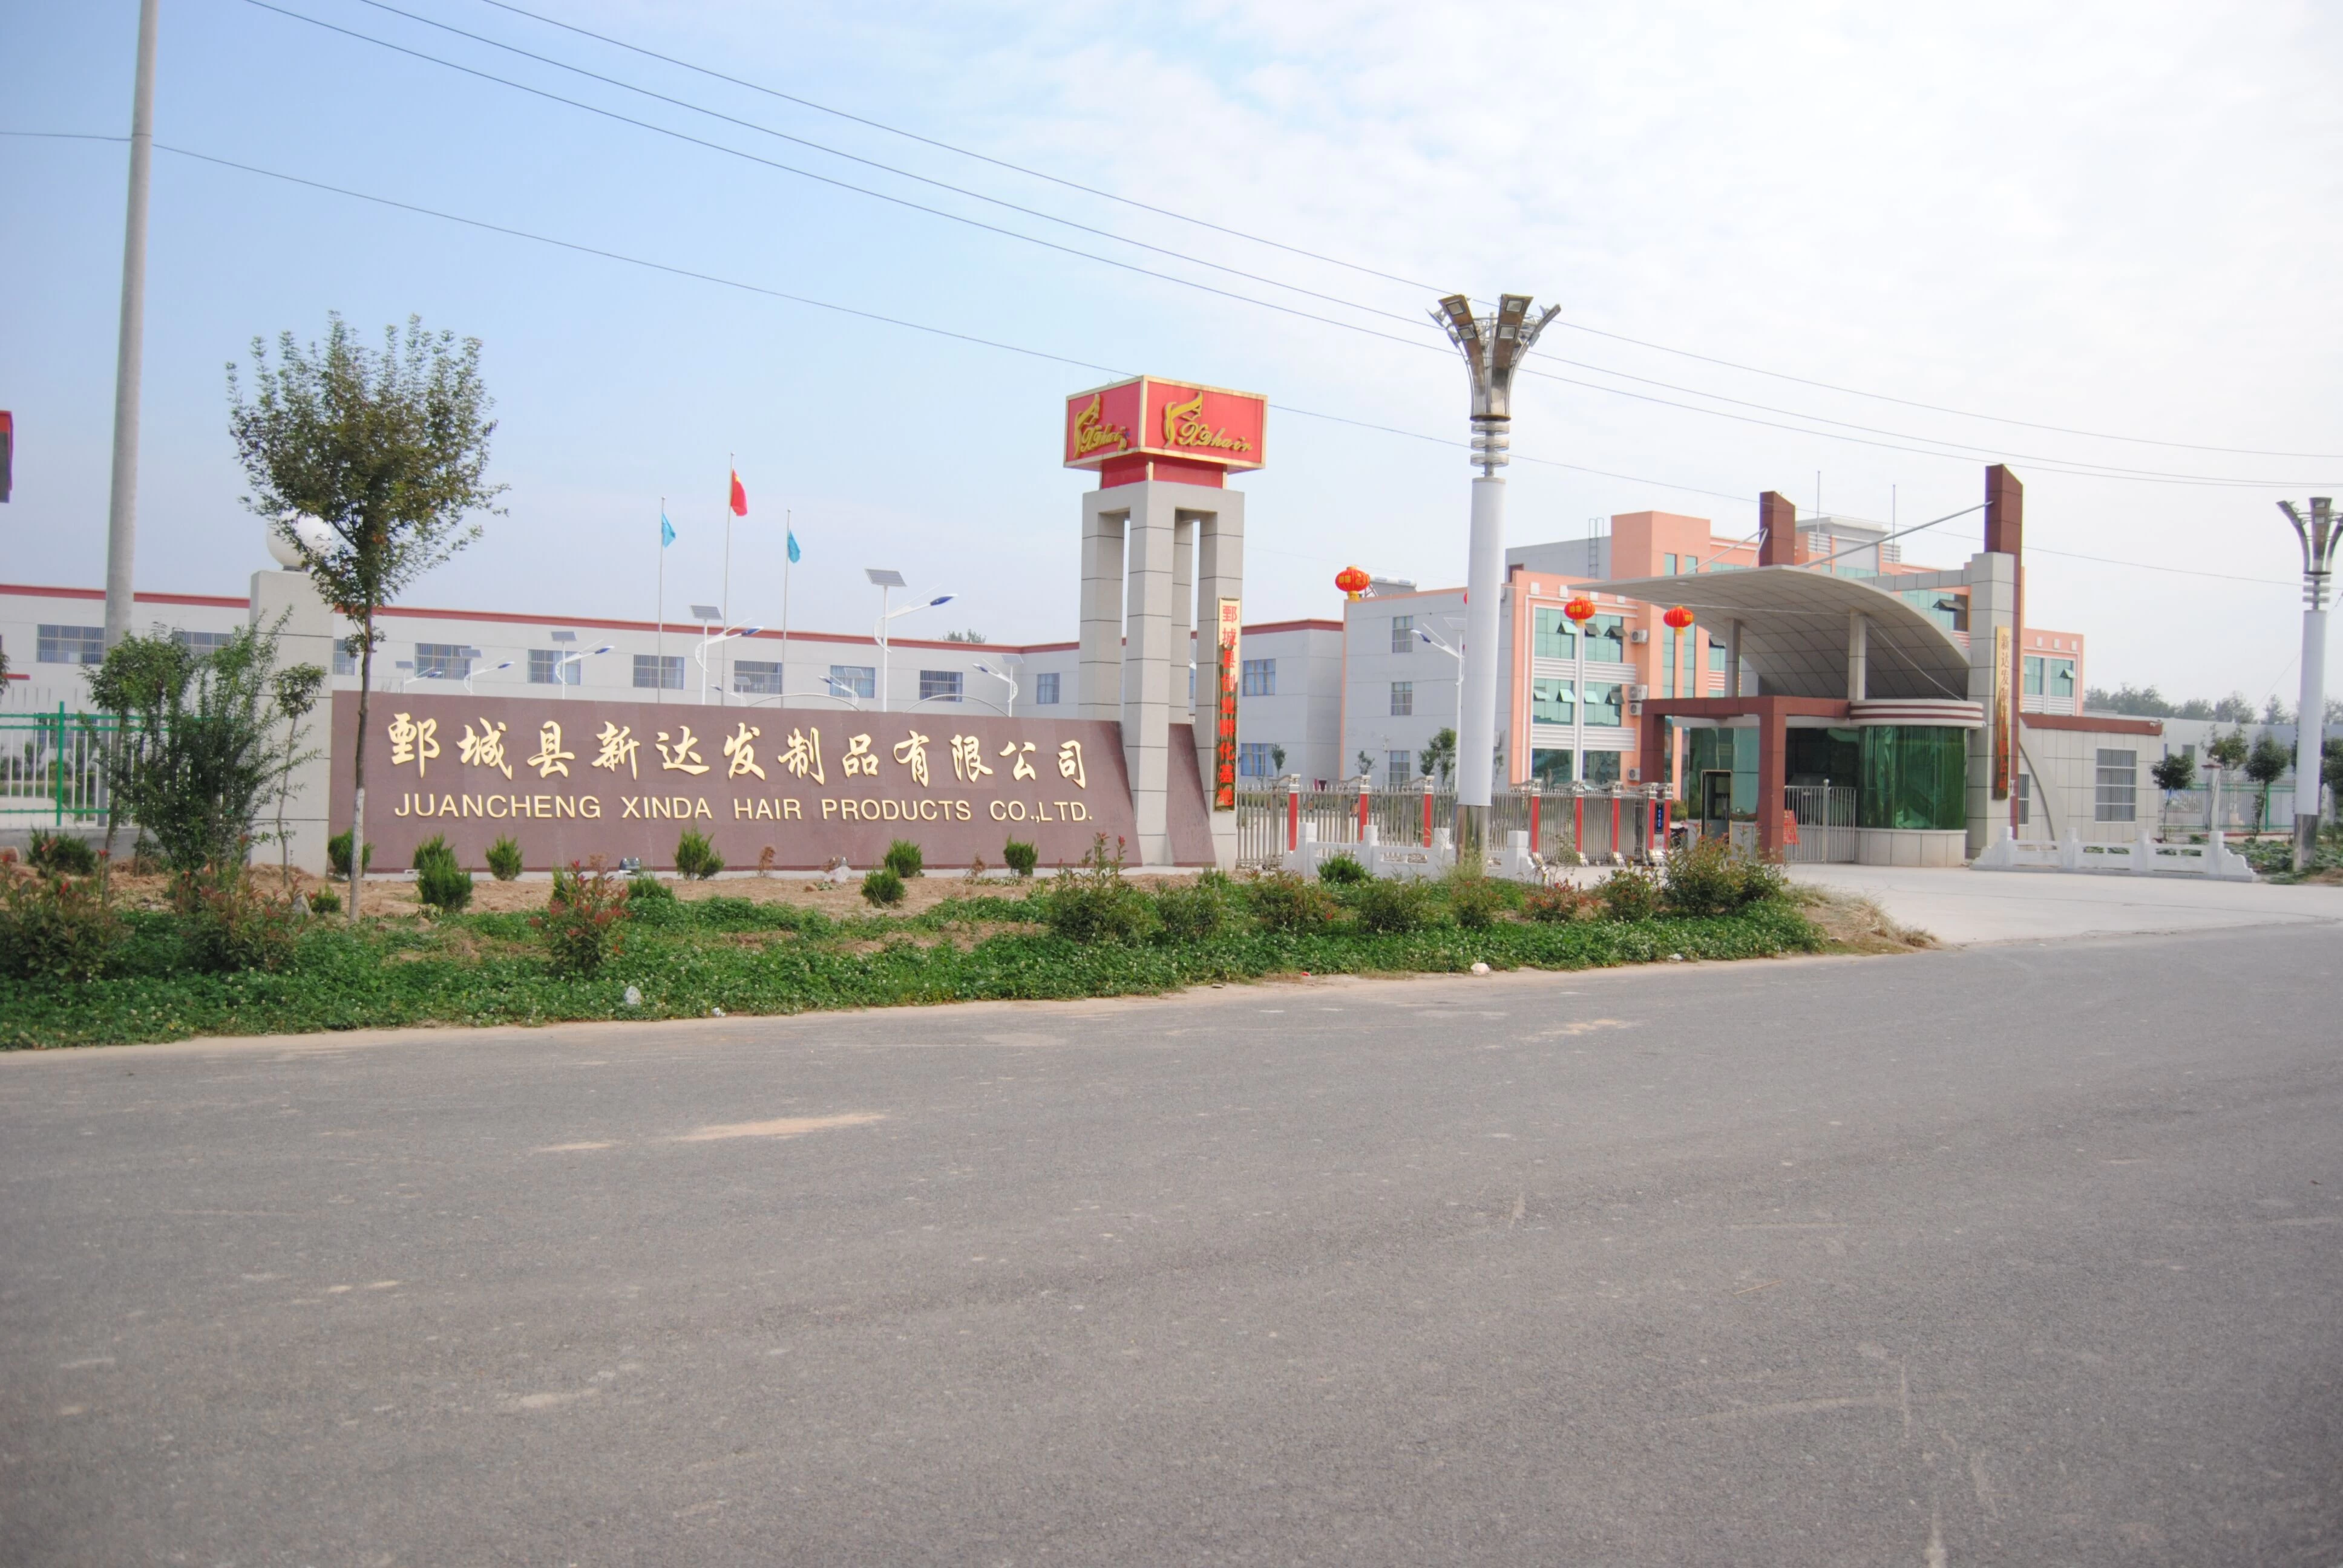 Panorama of factory